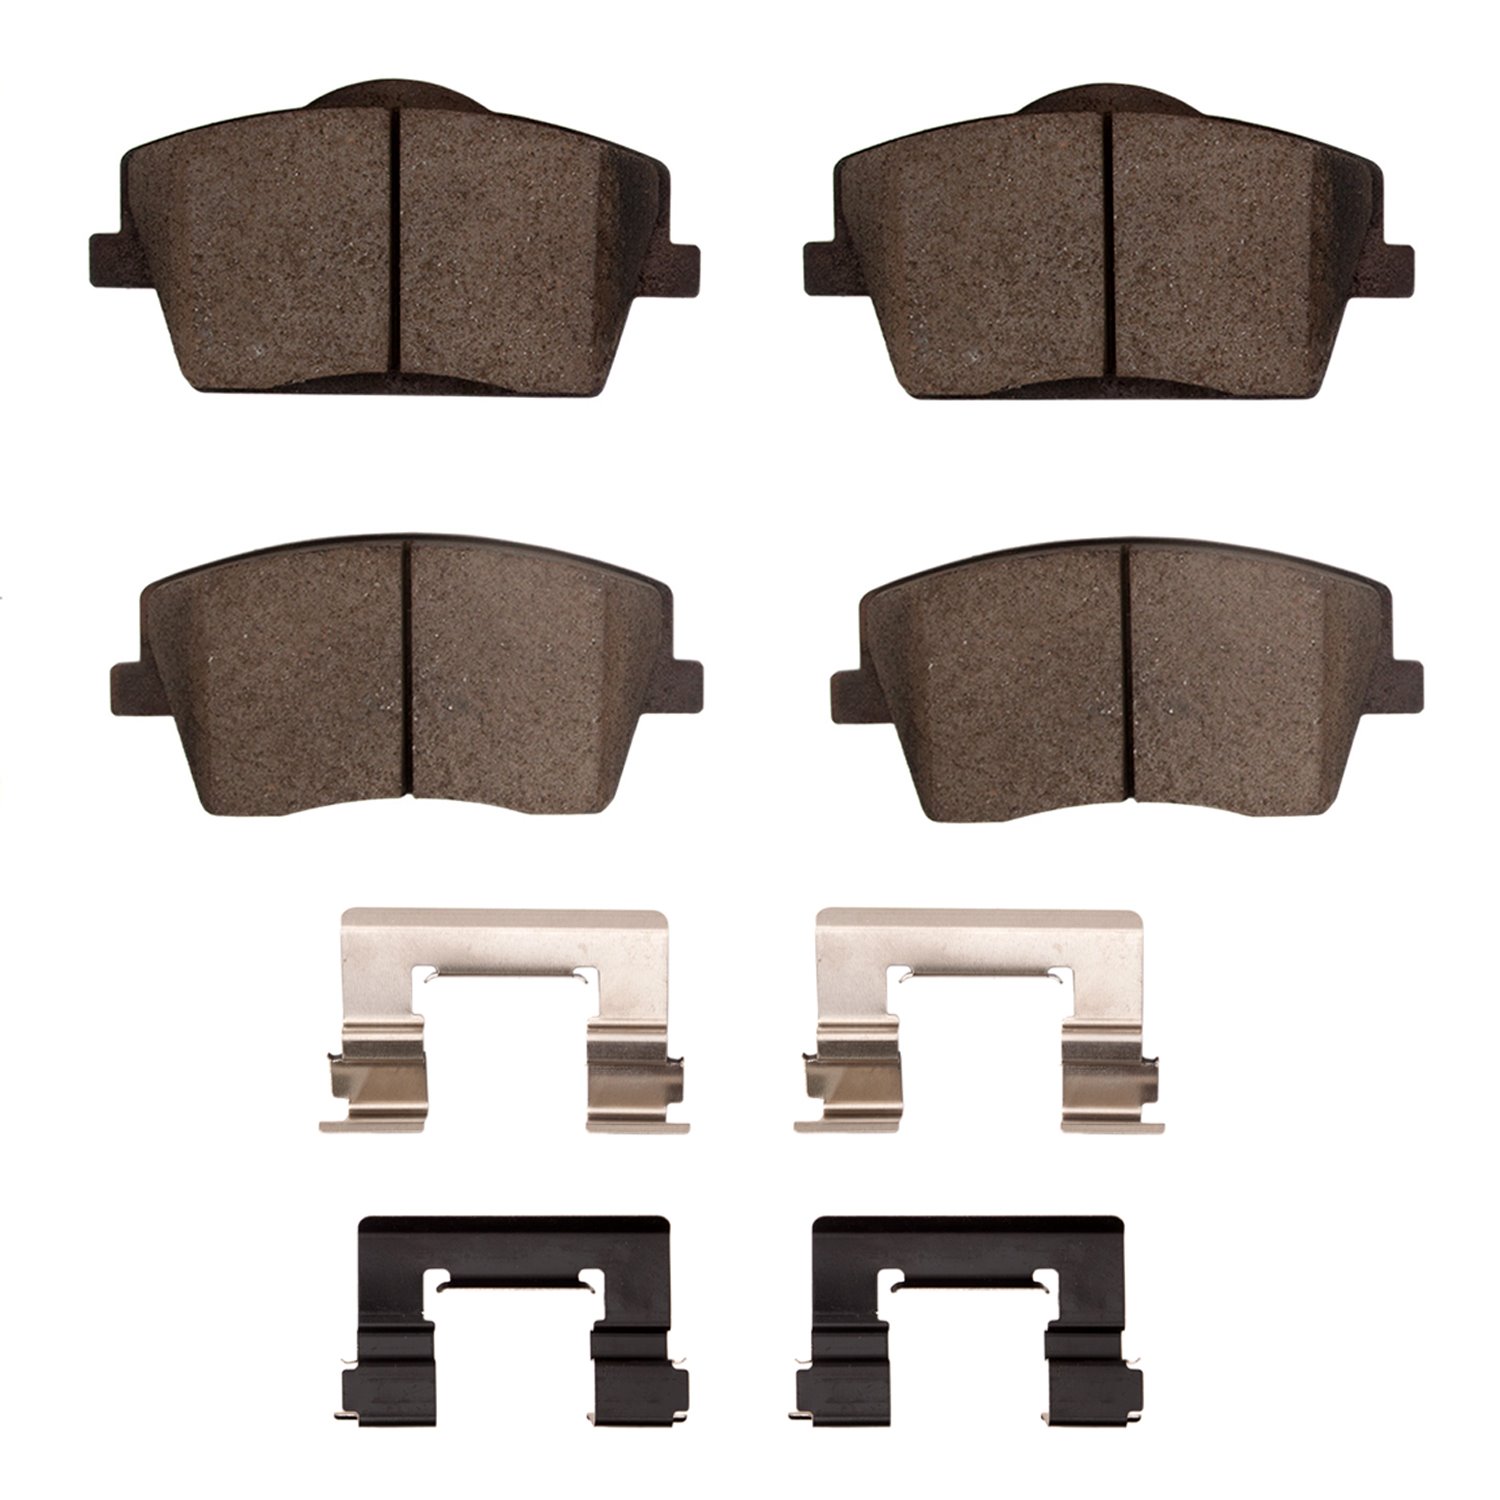 1310-2137-01 3000-Series Ceramic Brake Pads & Hardware Kit, Fits Select Volvo, Position: Front